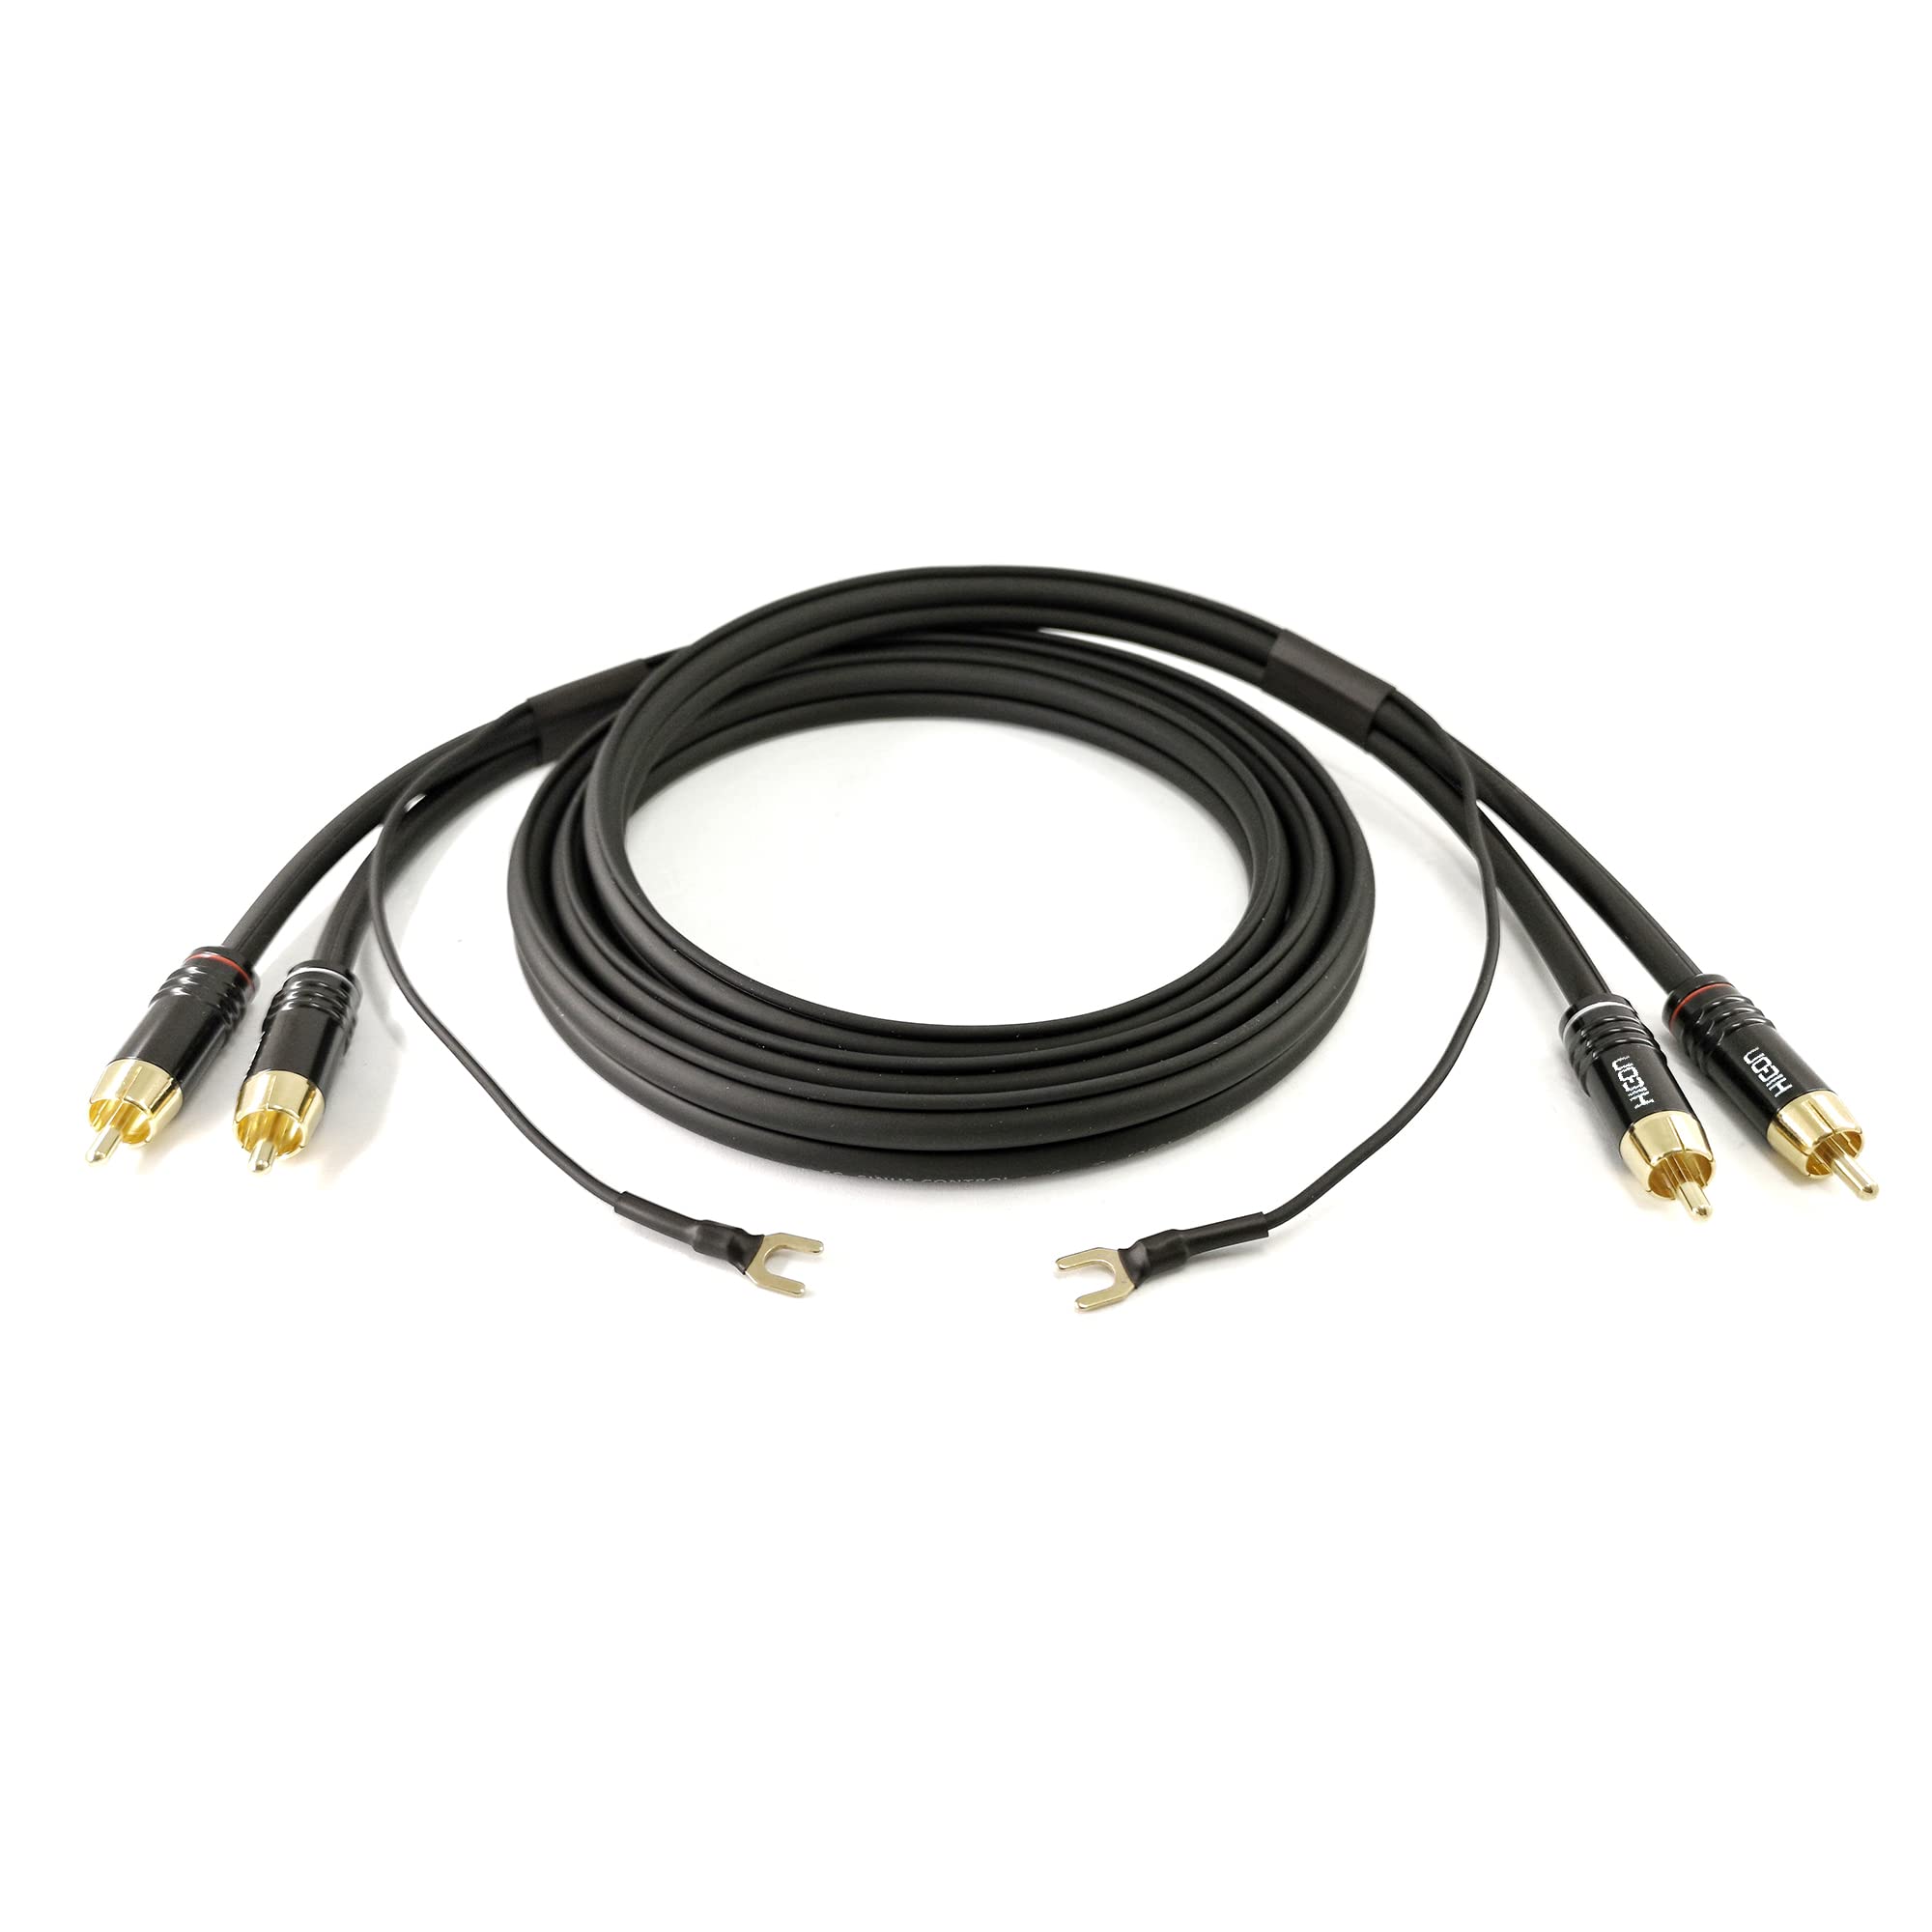 Selected Cable 4m Phonokabel geschirmt Stereo OFC 3x 0,35mm² RCA- Cinchkabel extra 4,1m lange Masseleitung für Plattenspieler GND - SC81-K3-BLK-0400